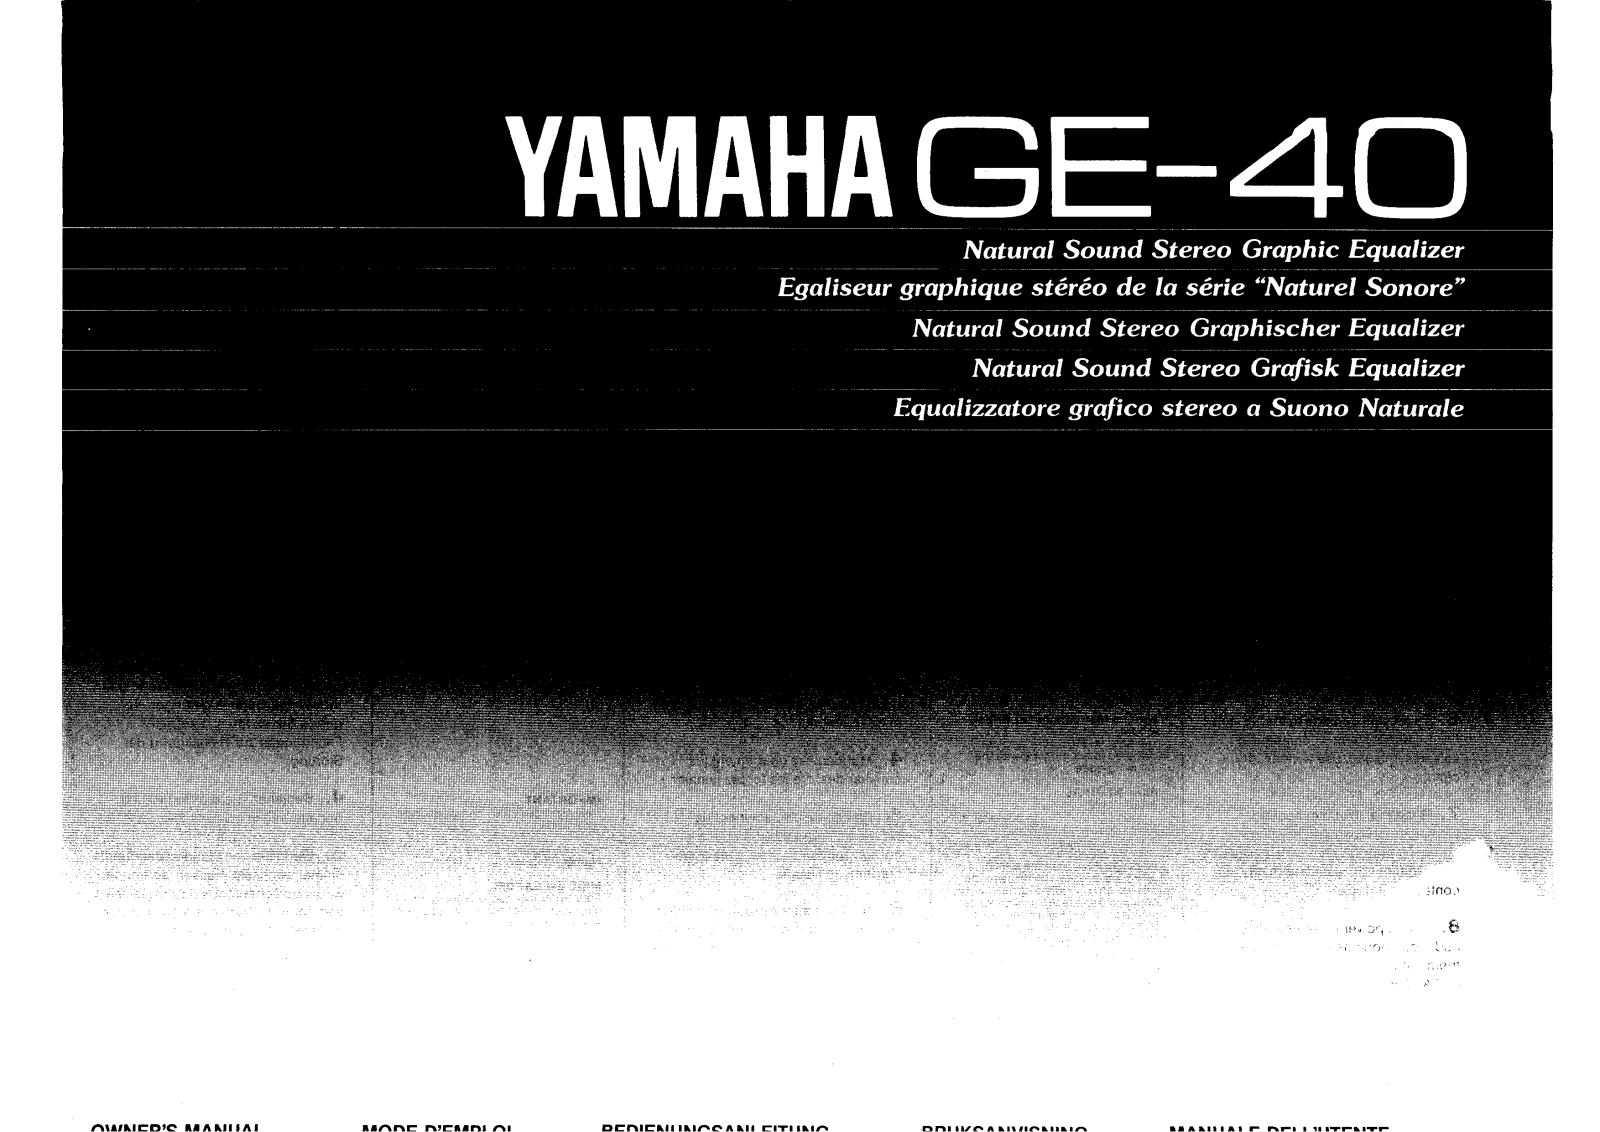 Yamaha GE-40 Owners Manual